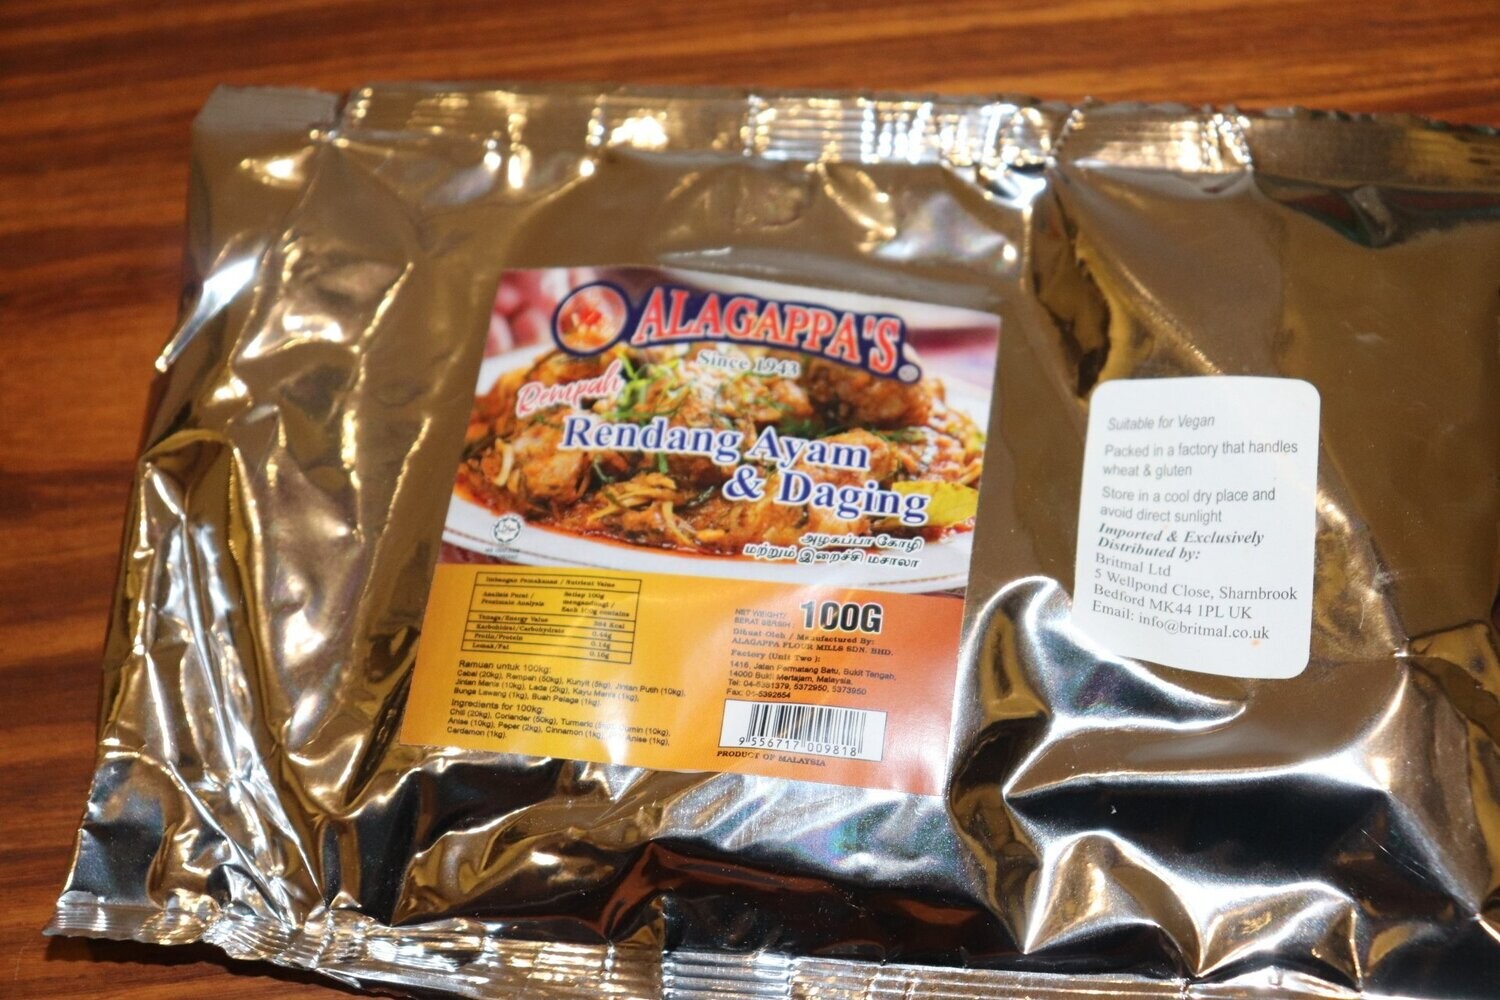 ALAGAPPA'S Rendang Curry Powder - 100g